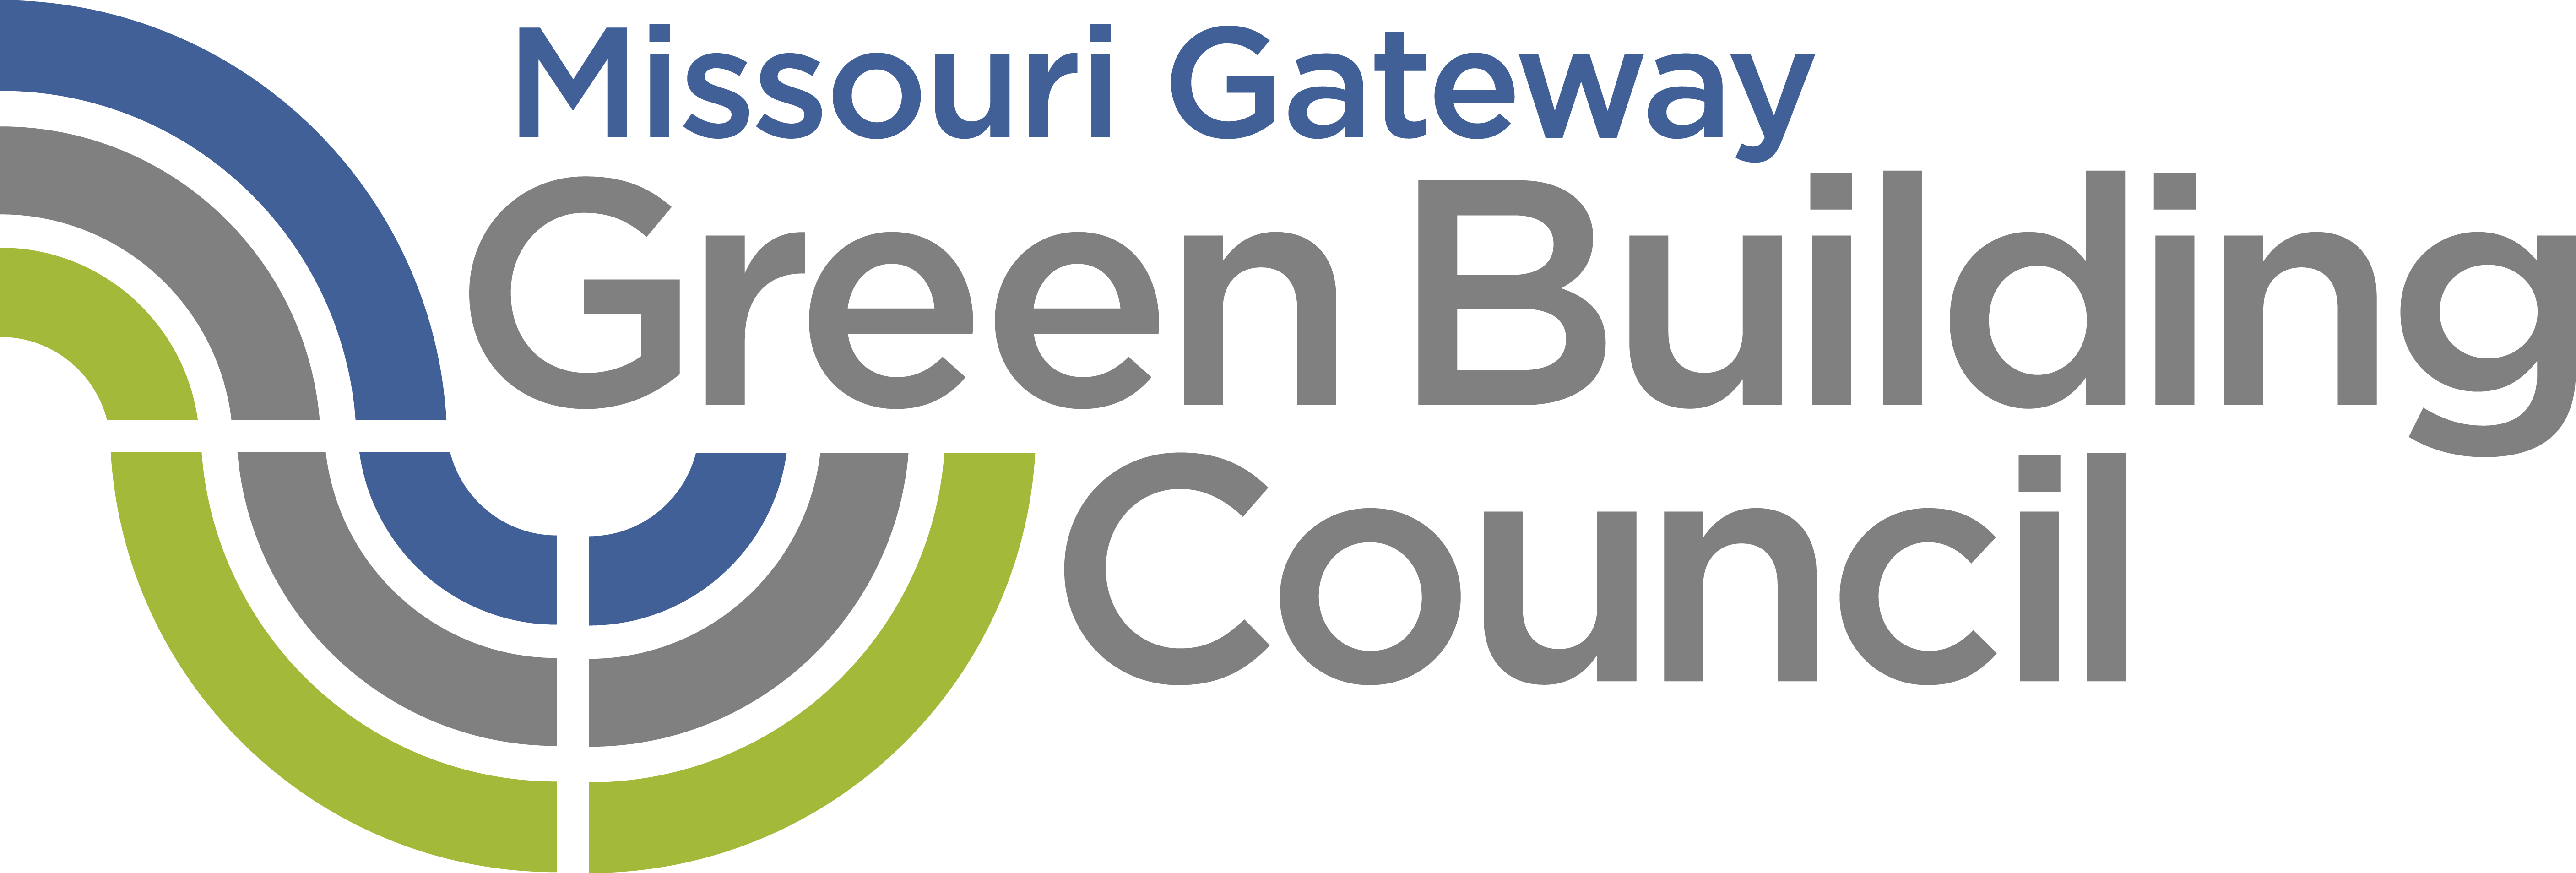 Missouri Gateway Green Building Council logo